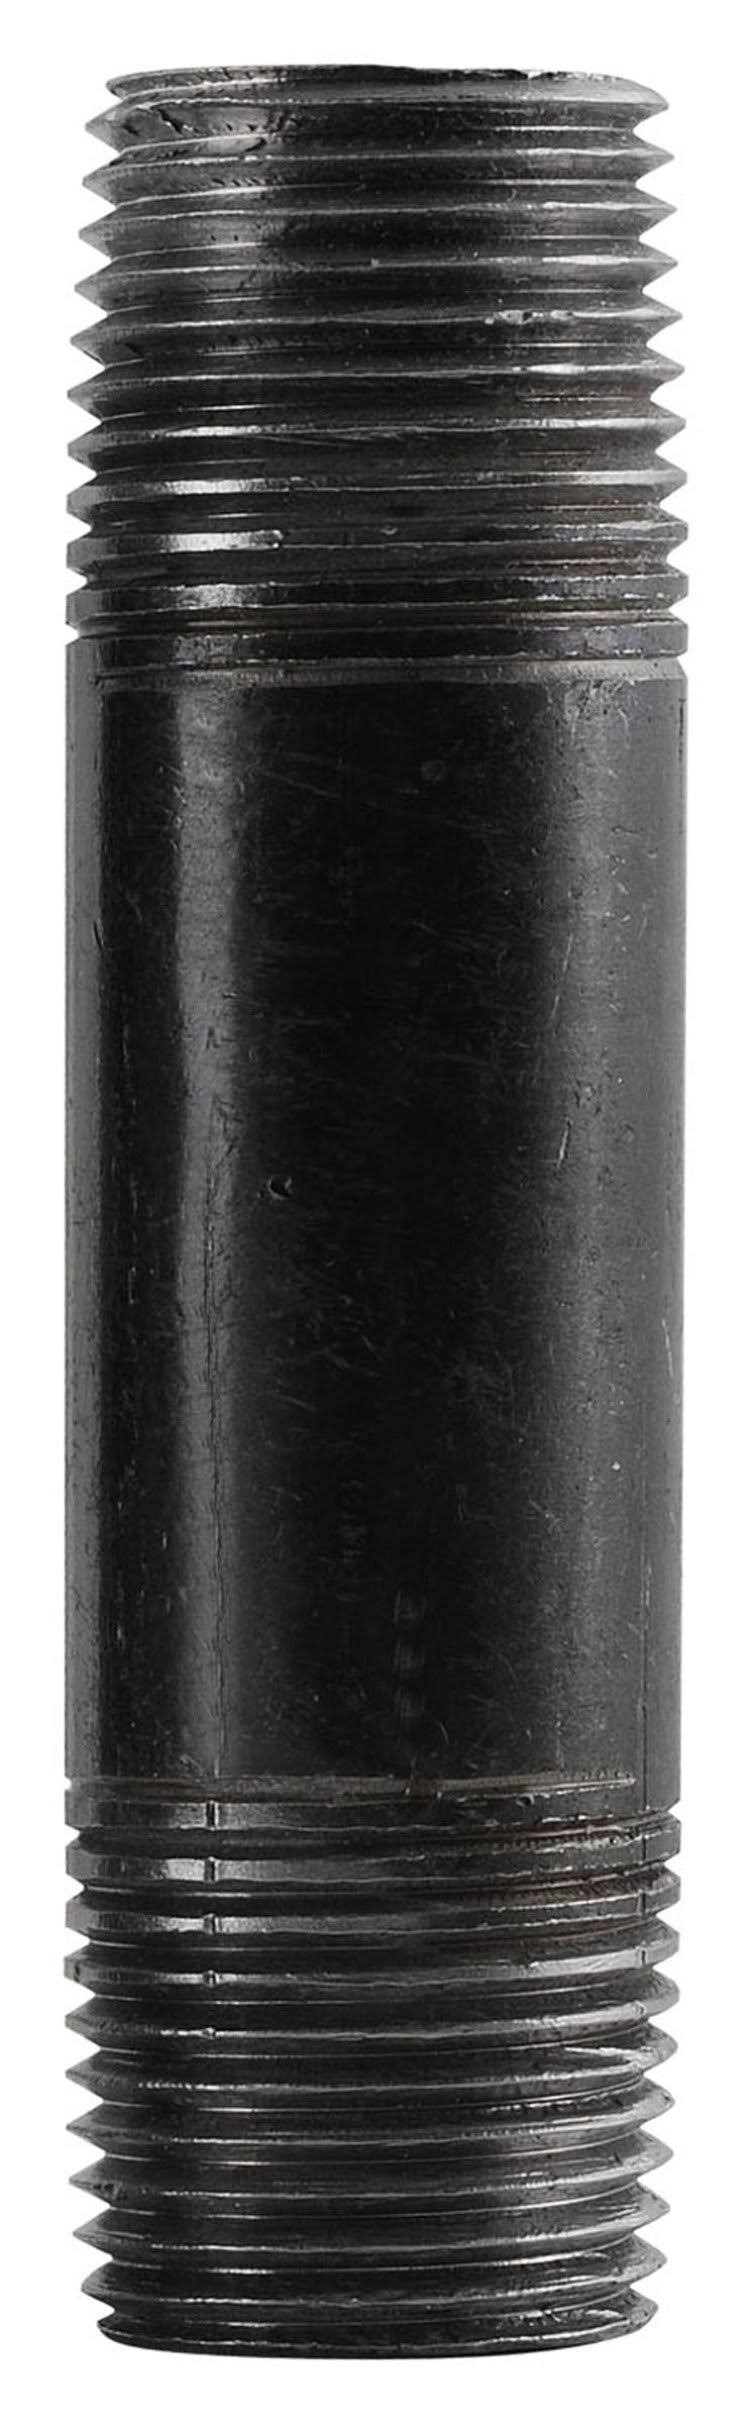 LDR 302 34X12 Pipe Nipple - Black